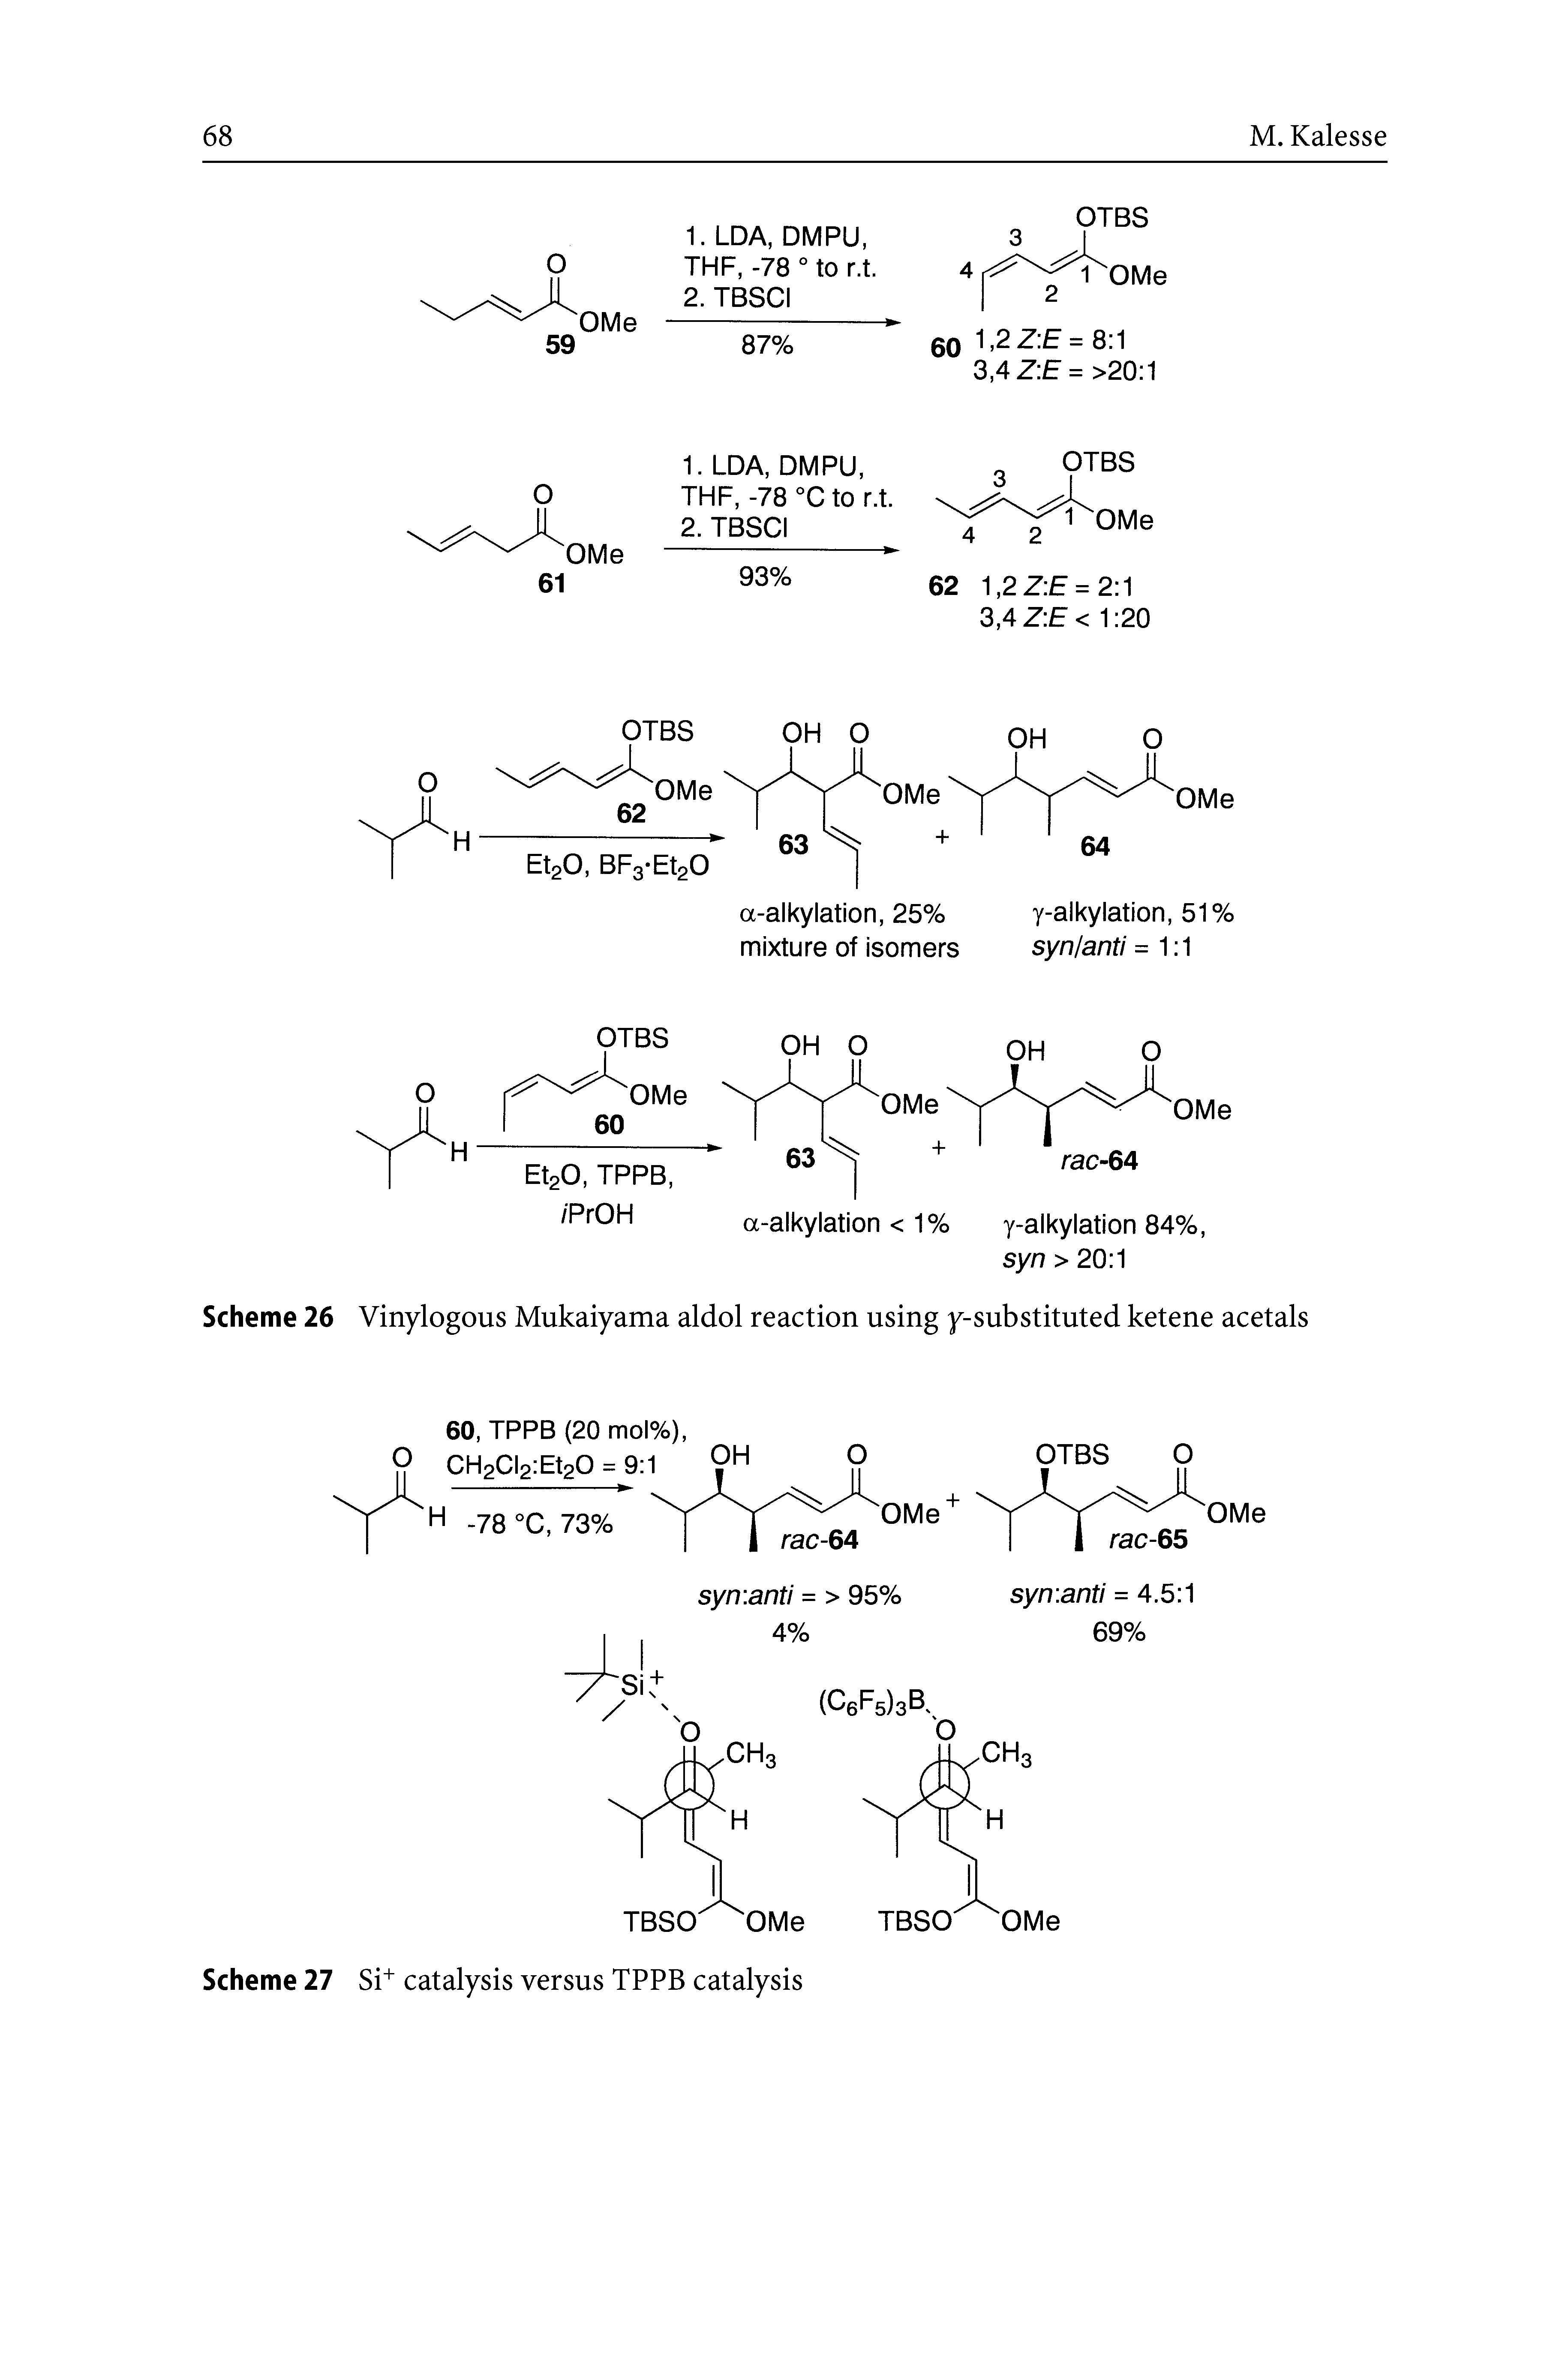 Scheme 26 Vinylogous Mukaiyama aldol reaction using y-substituted ketene acetals...